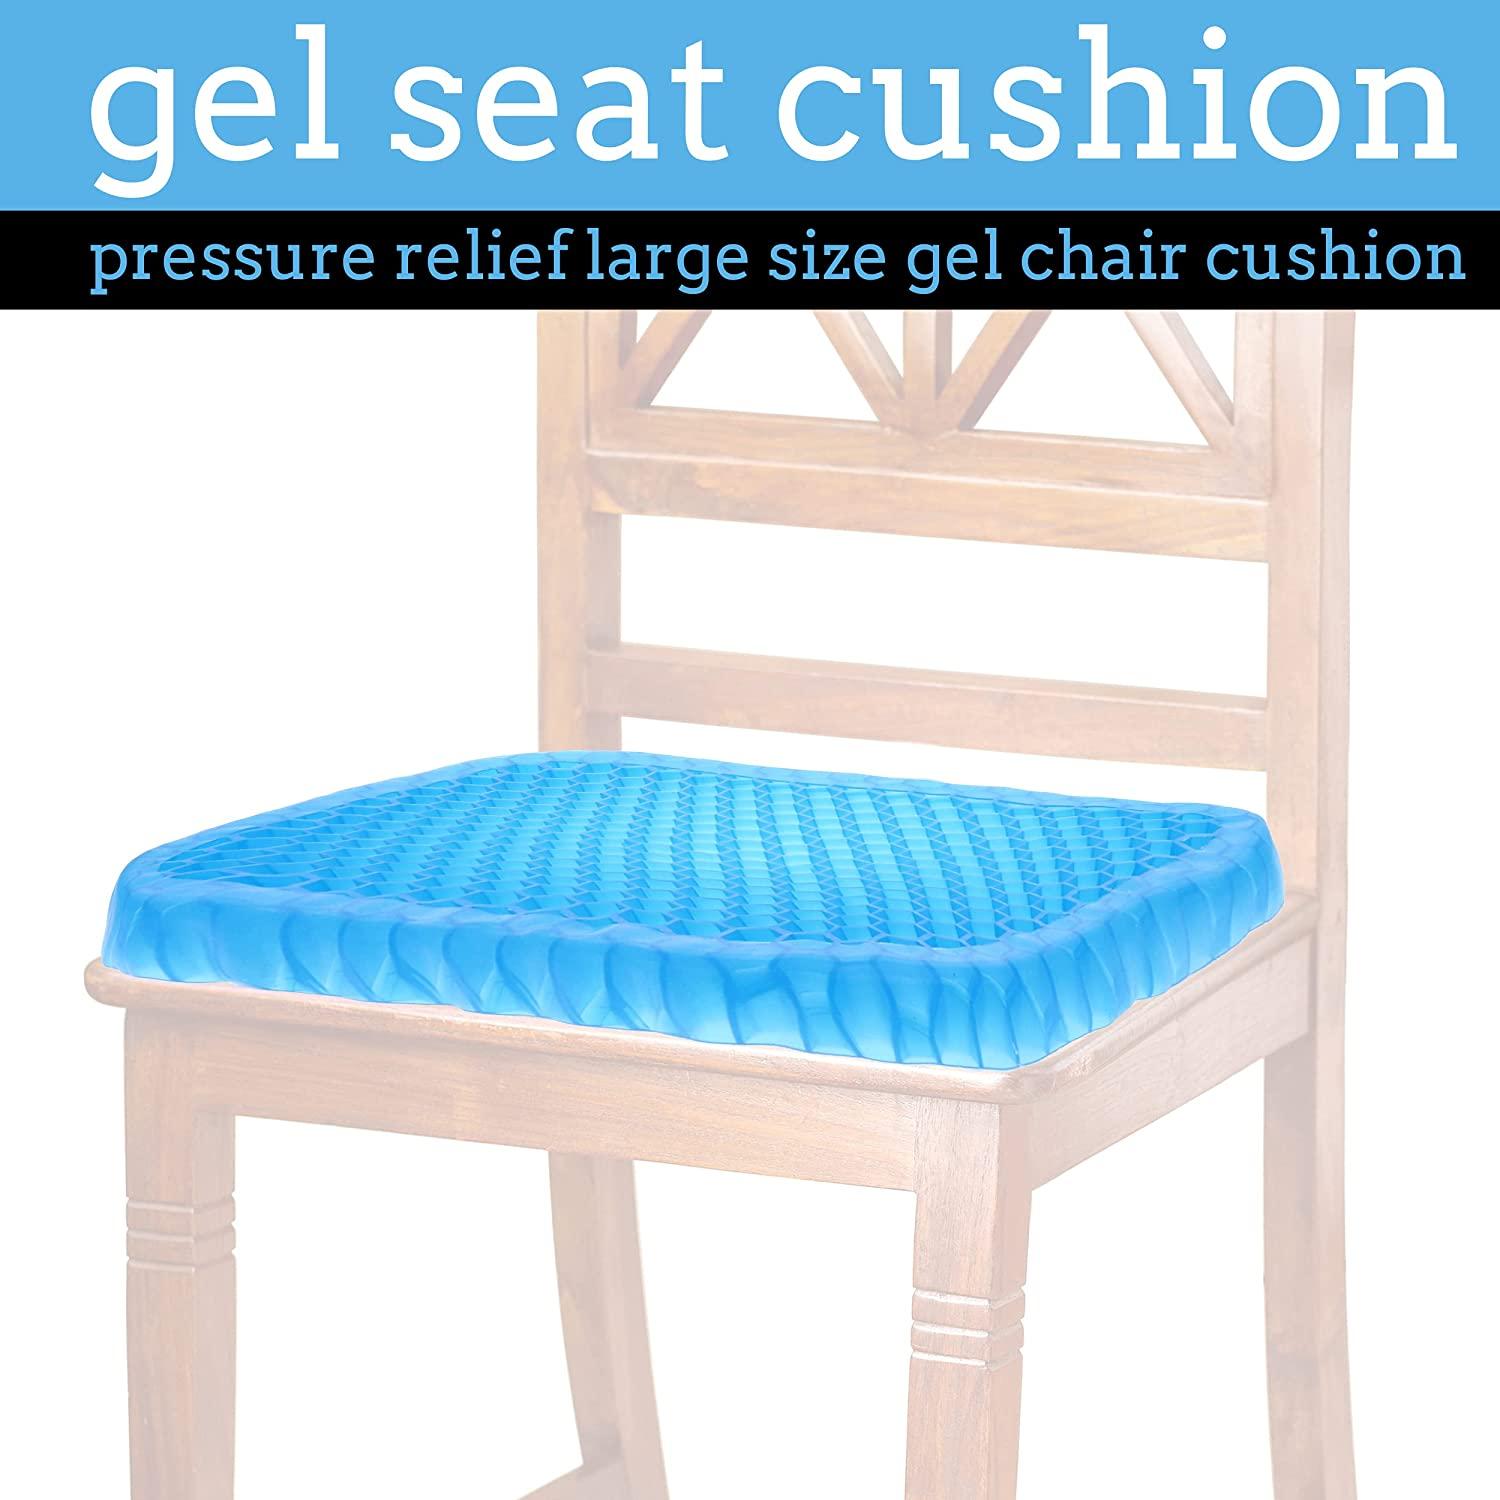 Gel Seat Cushion for Long Sitting - Portable Gel Cushion with